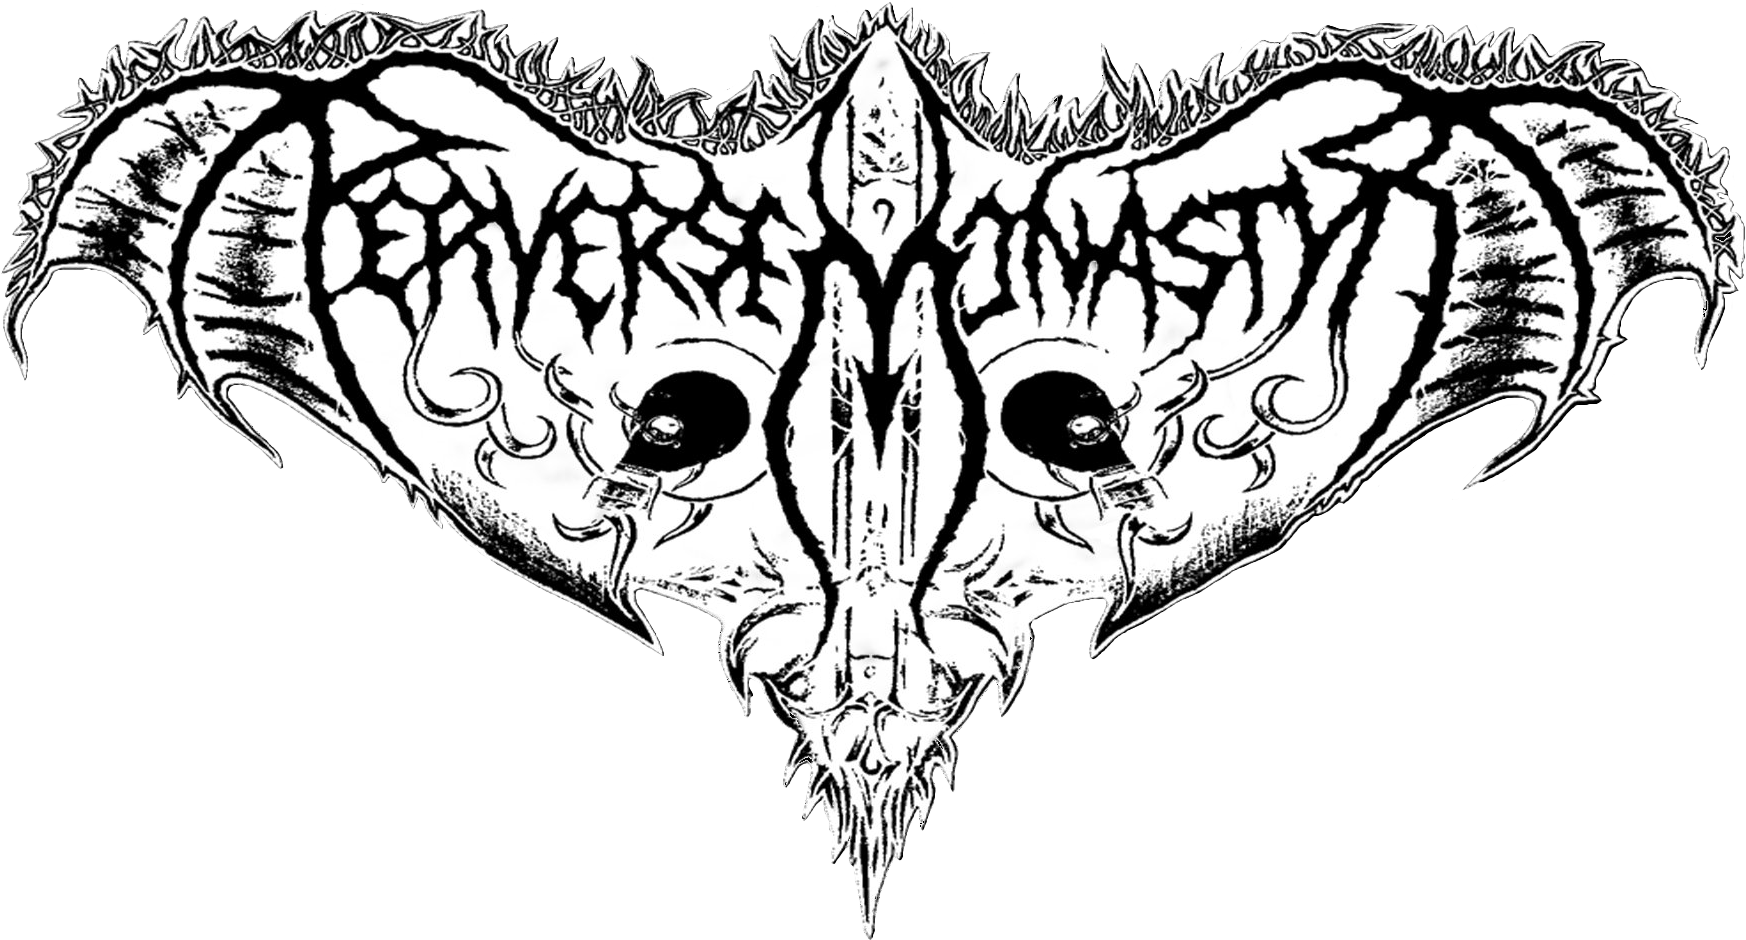 PERVERSE MONASTYR Radical Black Metal band